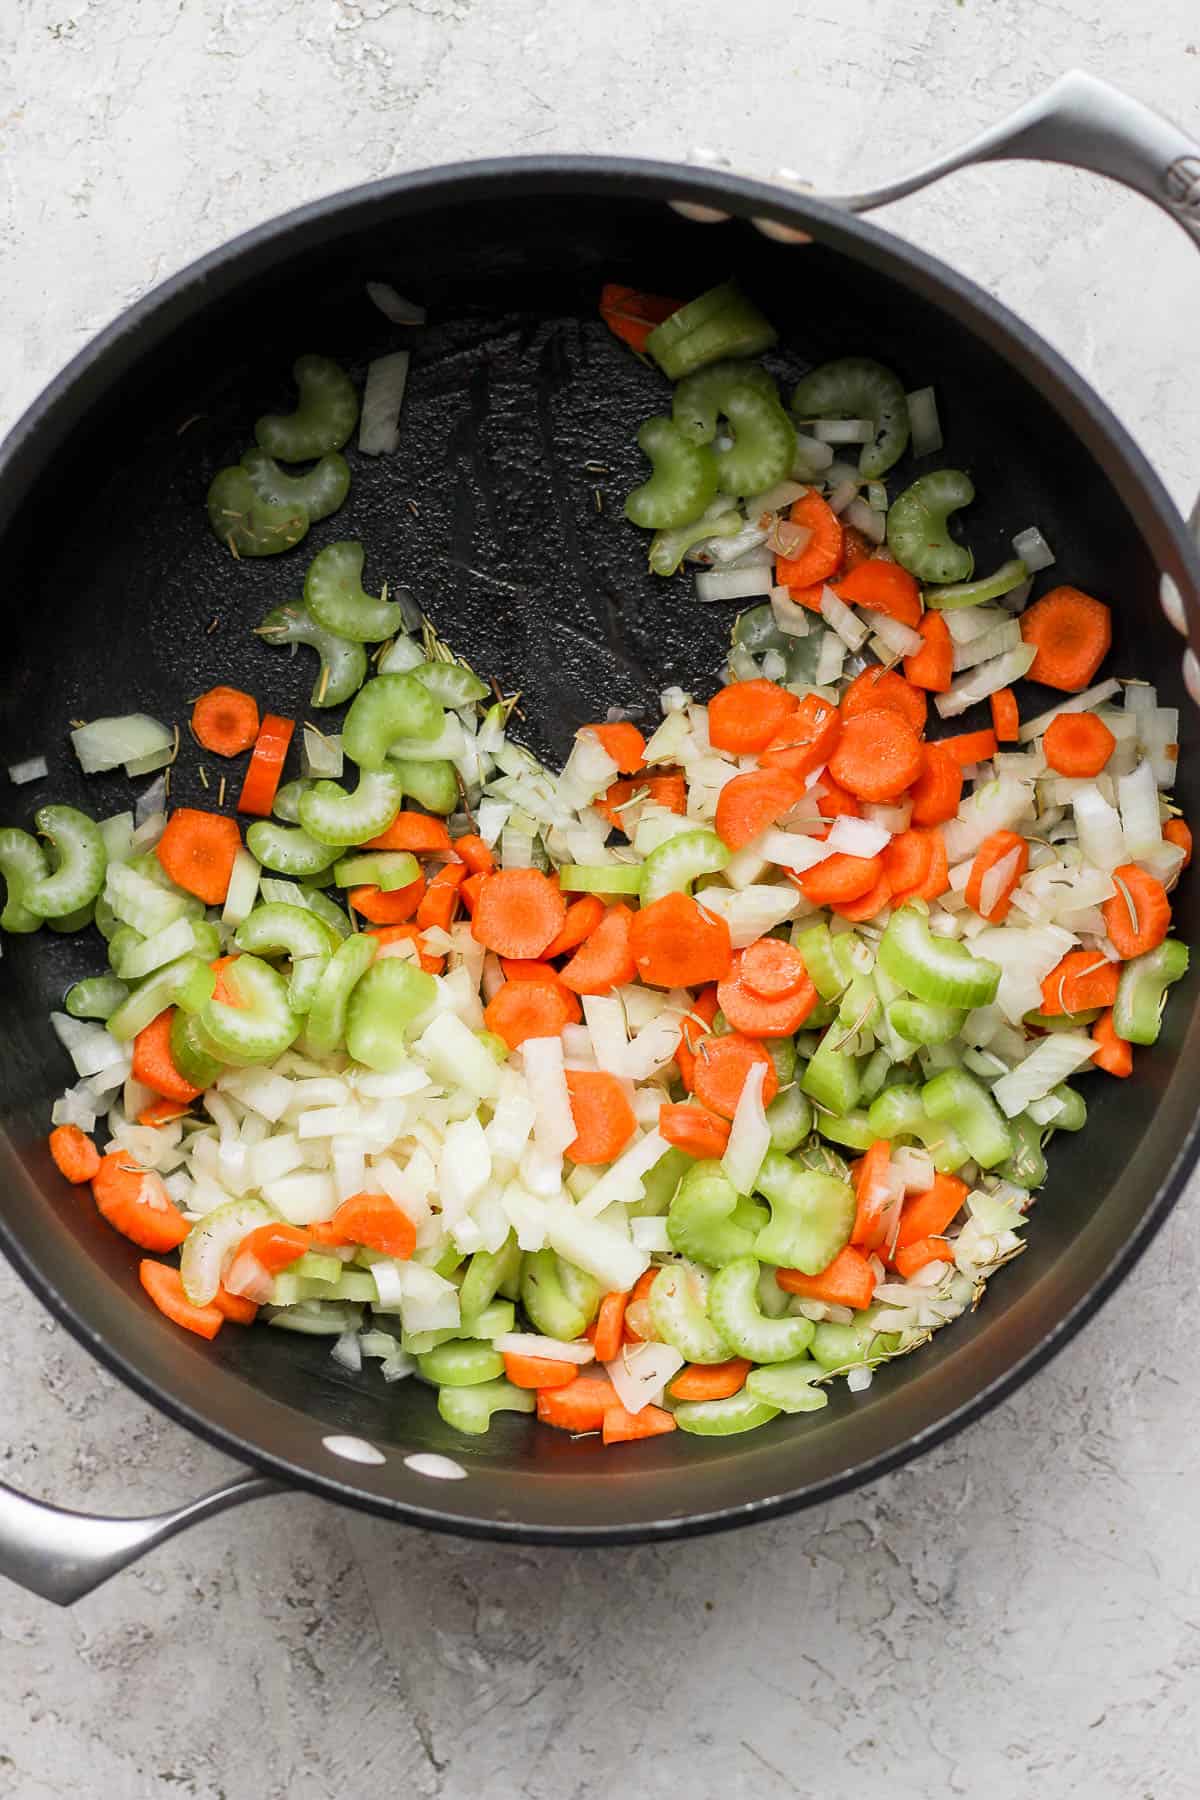 Onion, garlic, carrots, celery, & fresh herbs sautéing in the pot.